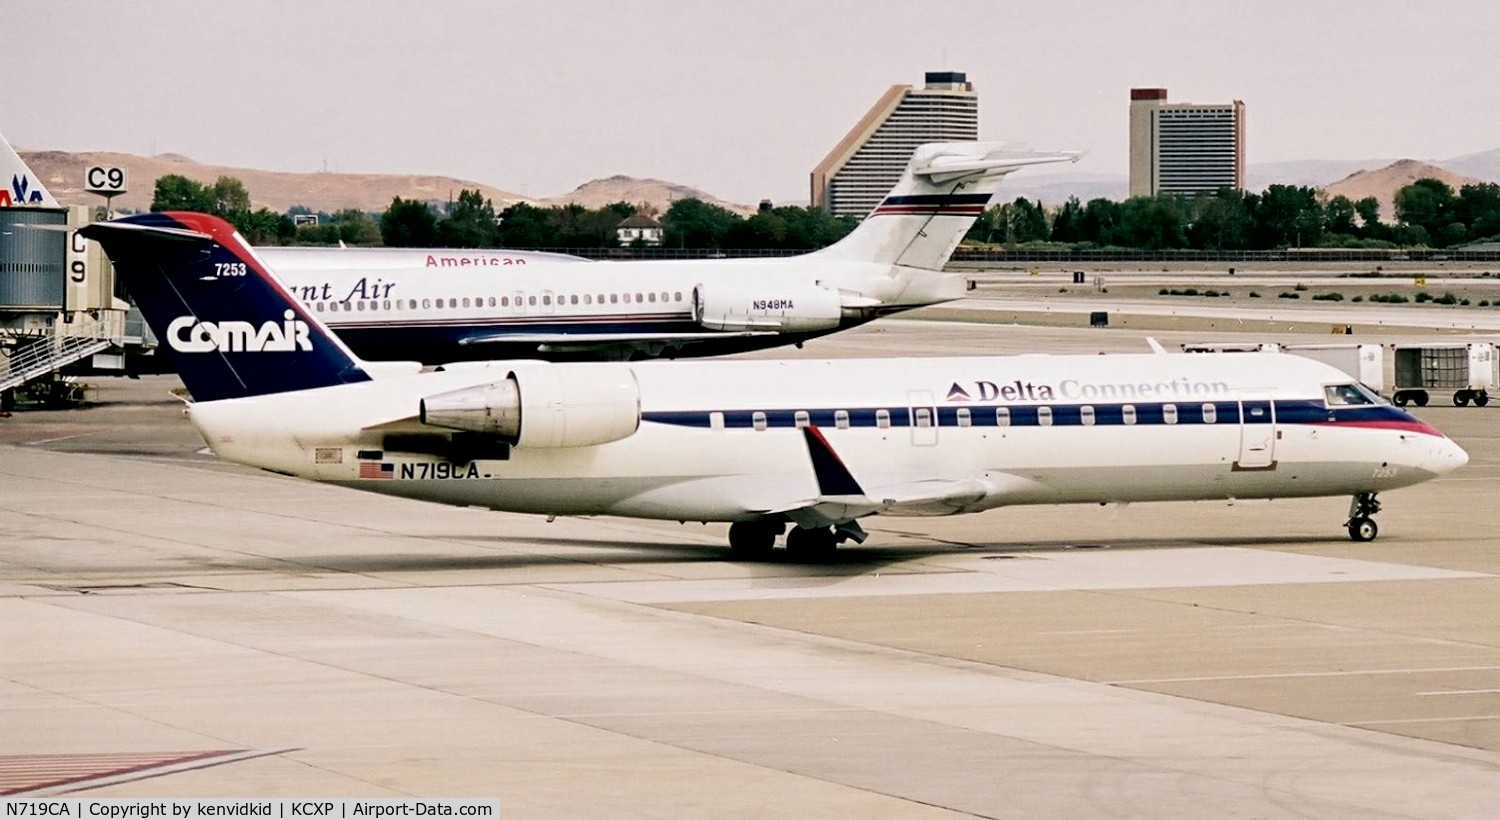 N719CA, 1998 Bombardier CRJ-100ER (CL-600-2B19) C/N 7253, Comair Delta Connection